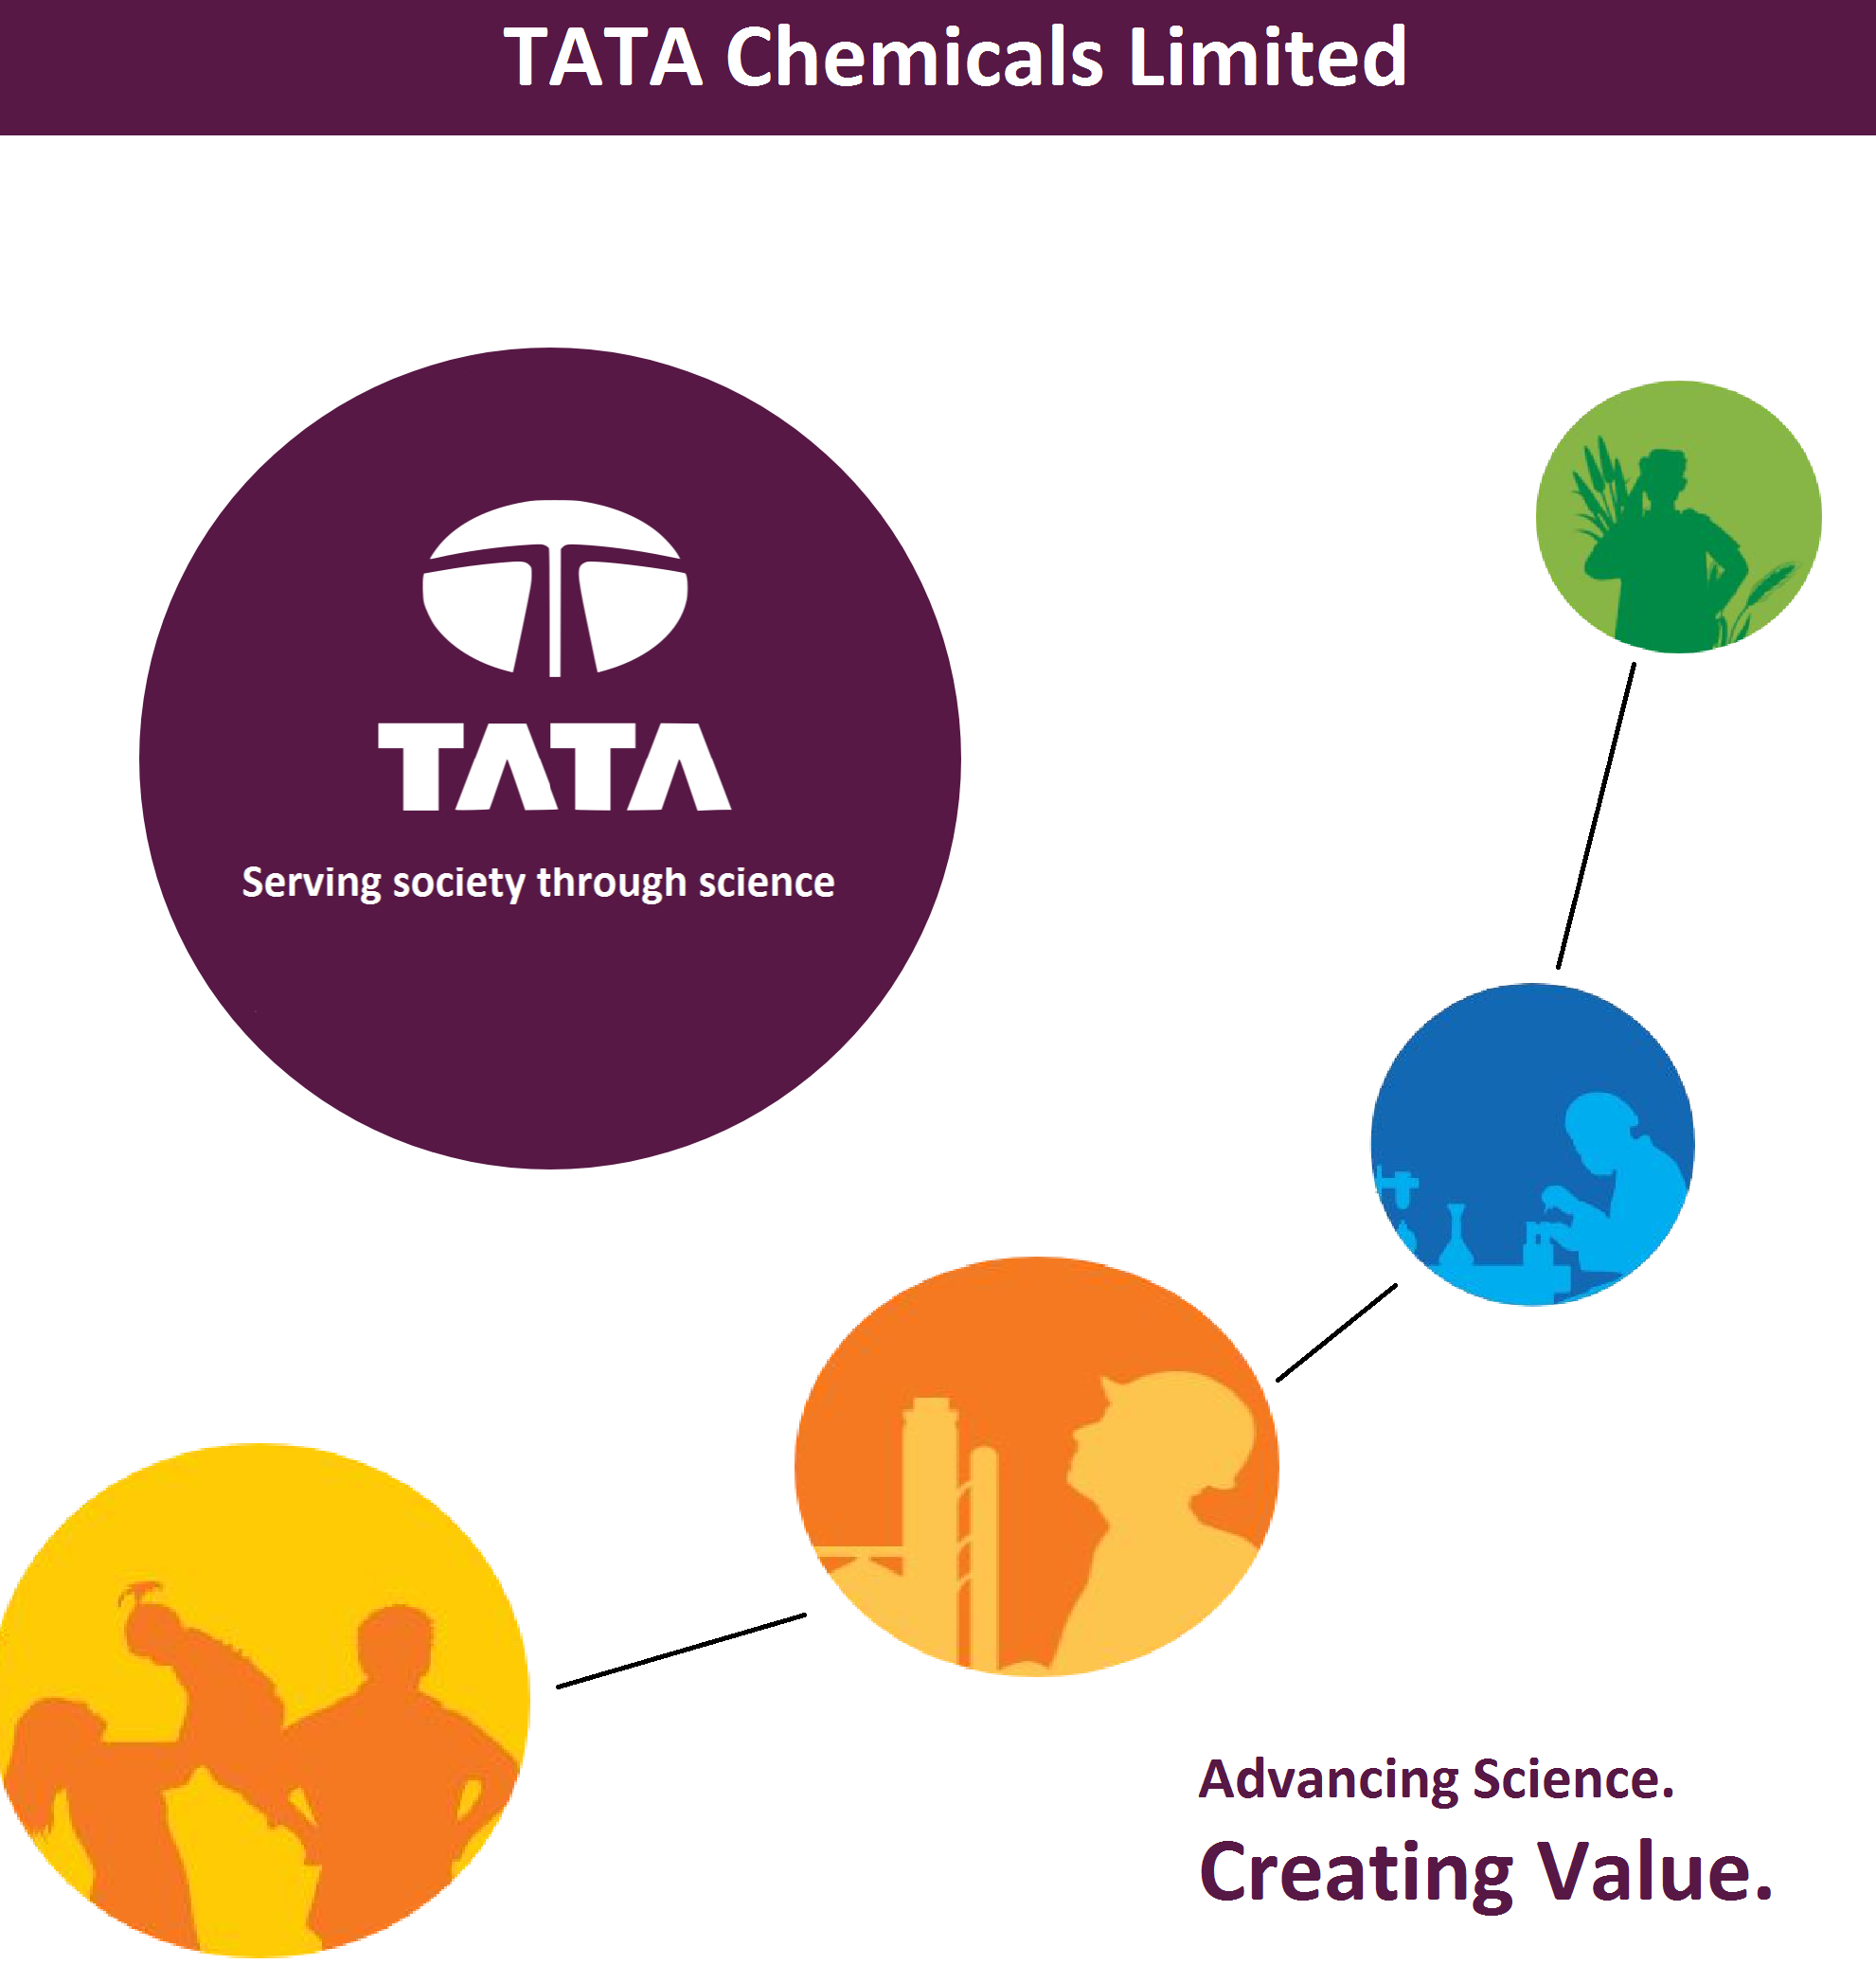 tata-chemicals-ltd-serving-society-through-science-stockedge-blog